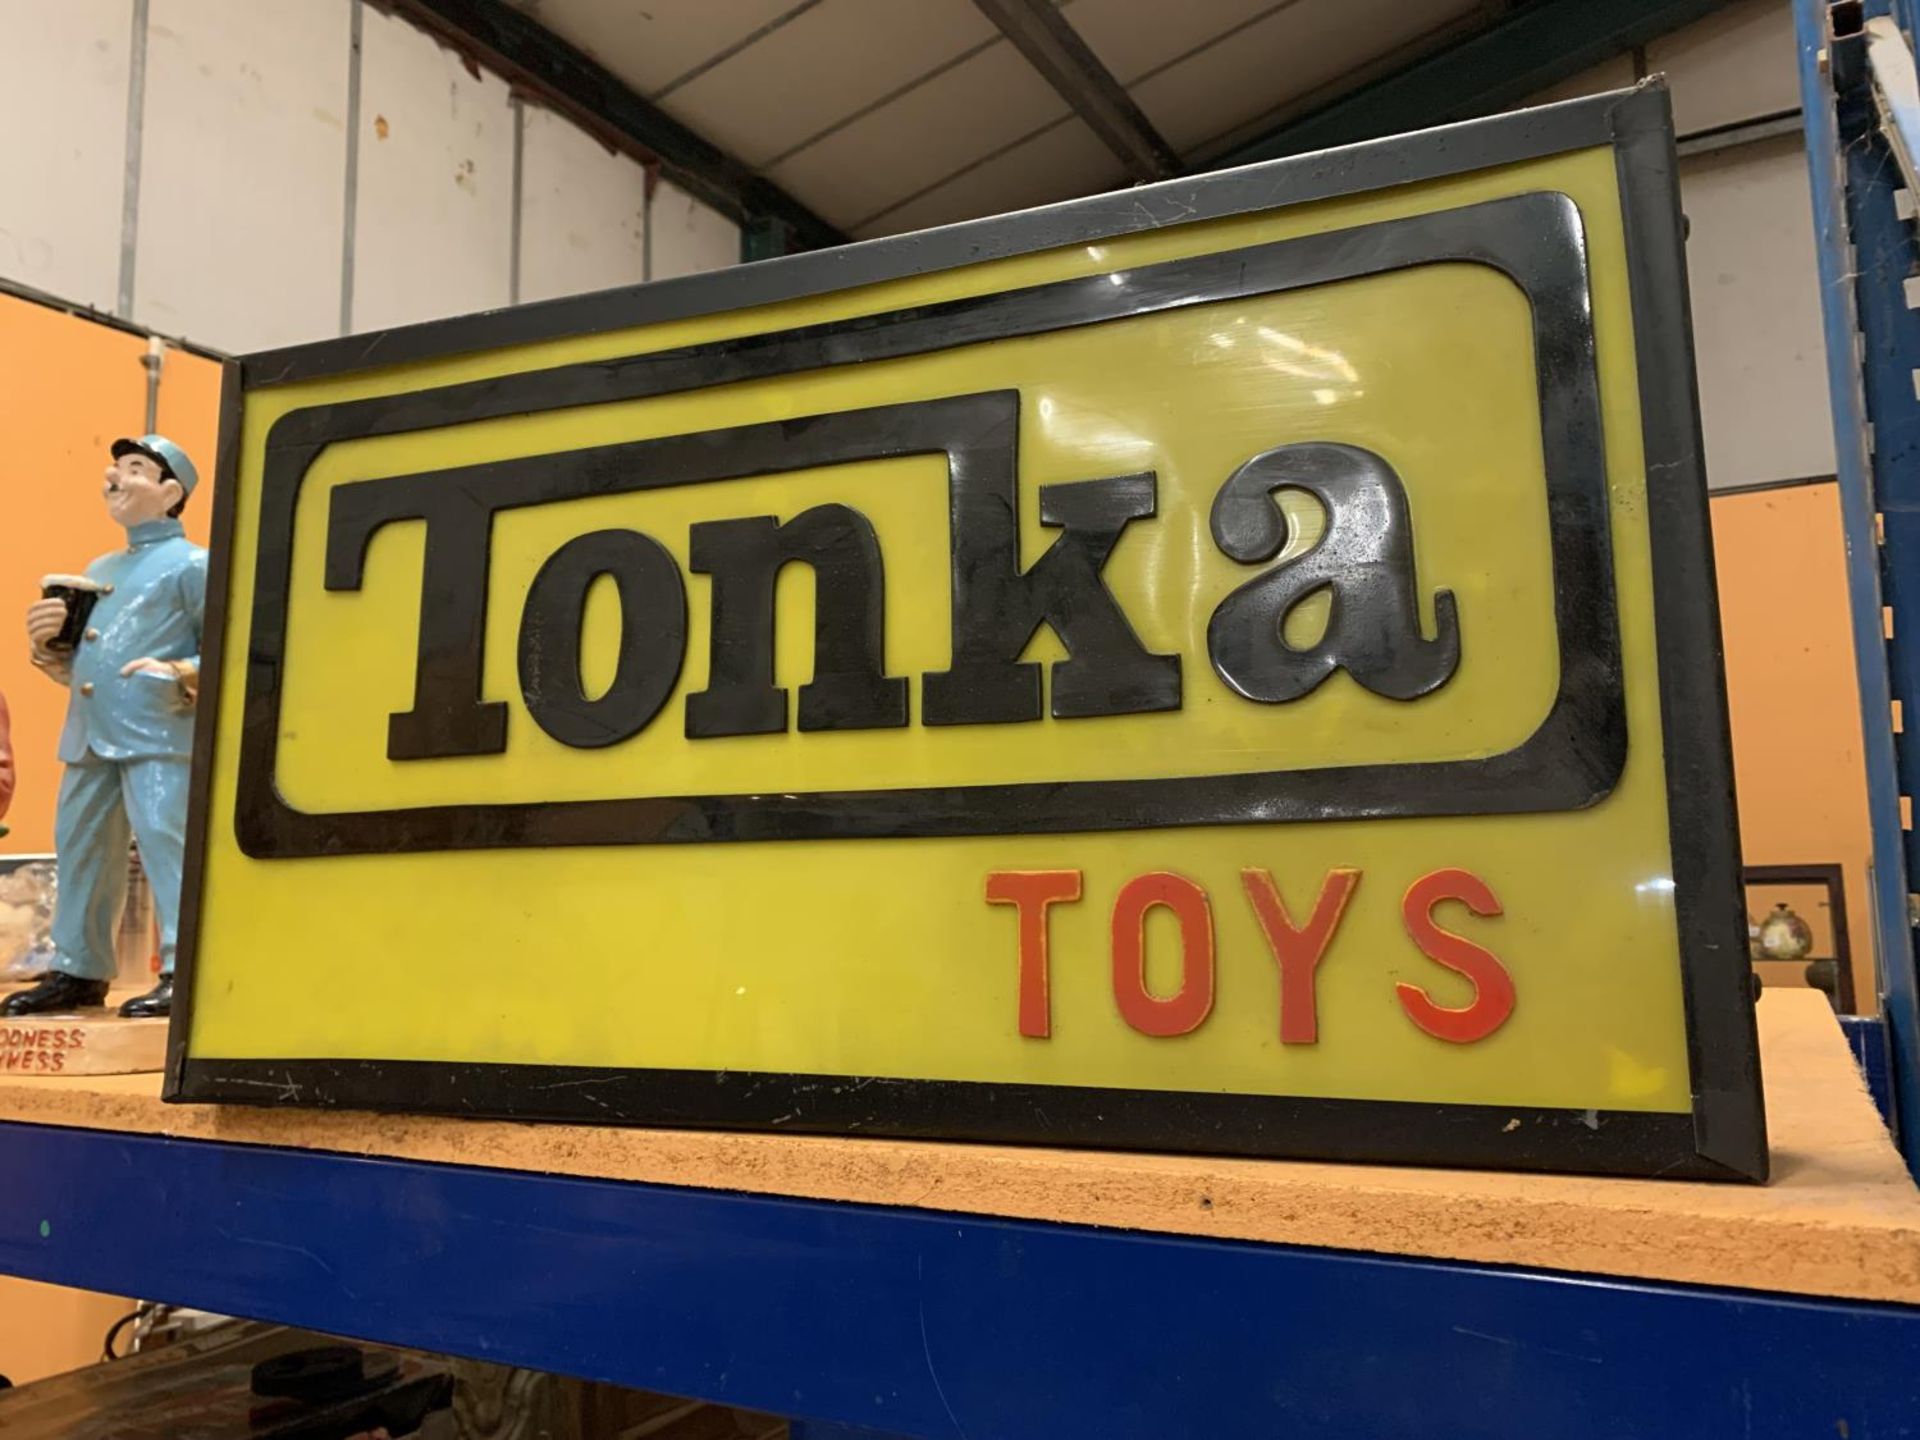 A TONKA TOYS ILLUMINATED LIGHT BOX SIGN - Image 3 of 3